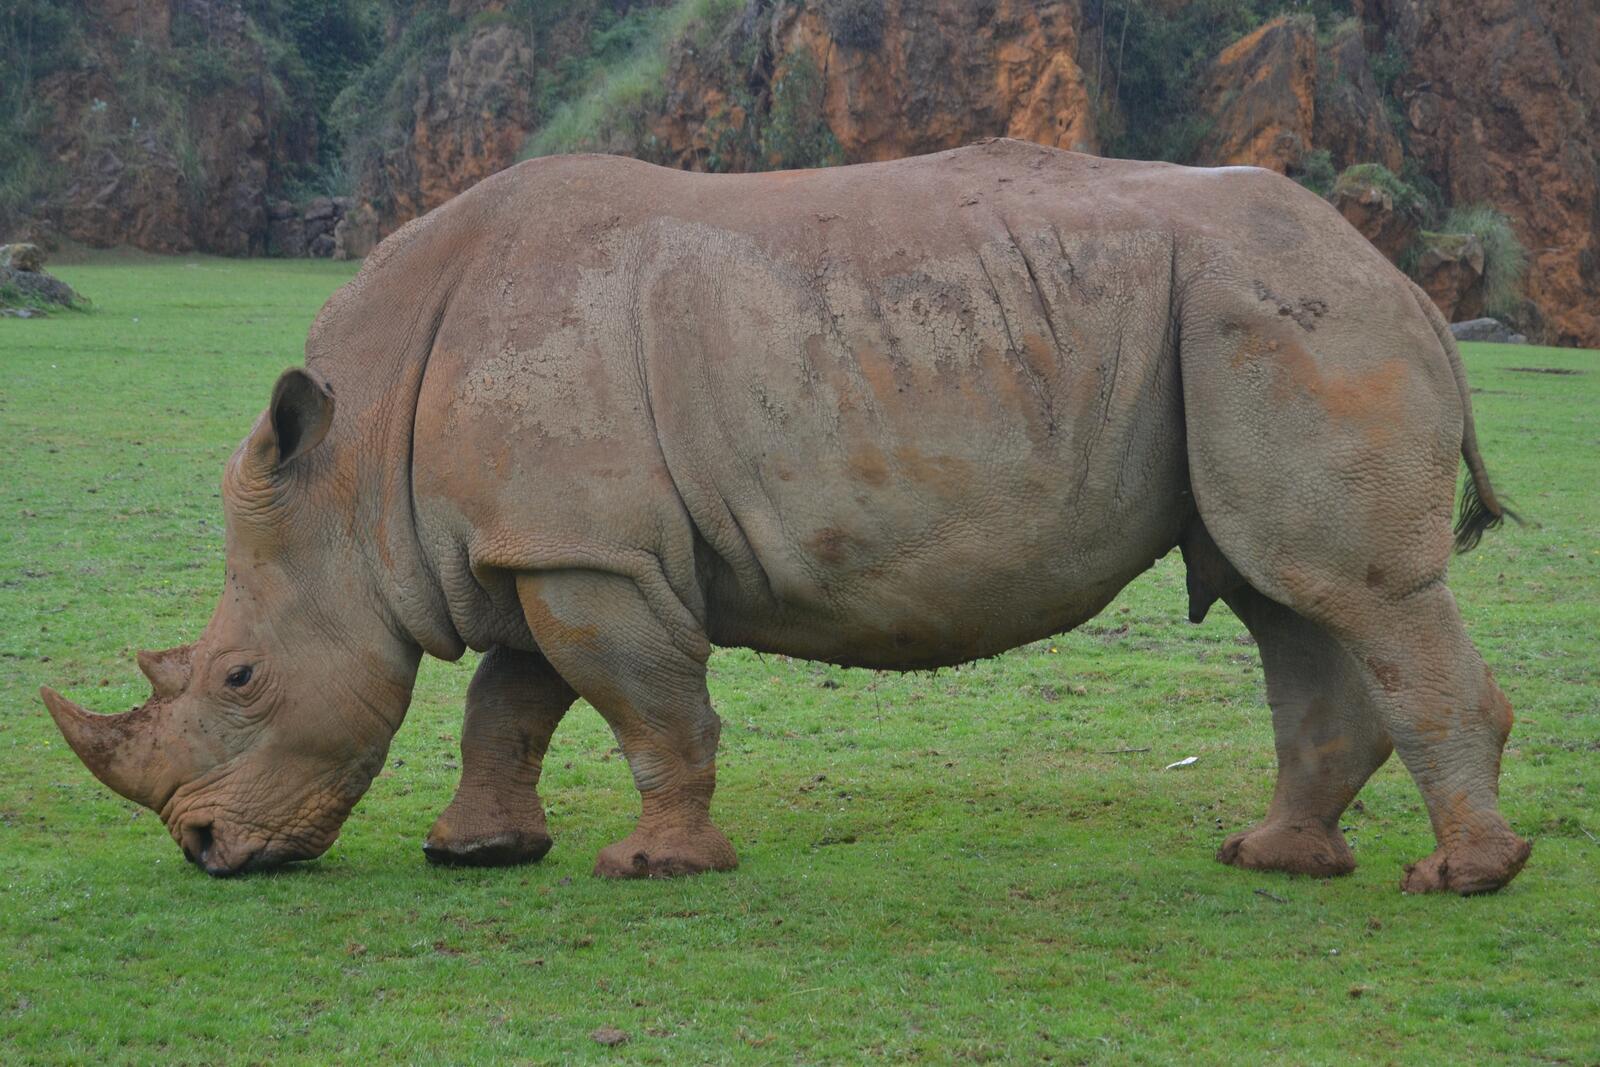 Free photo A large rhinoceros walks across the lawn.